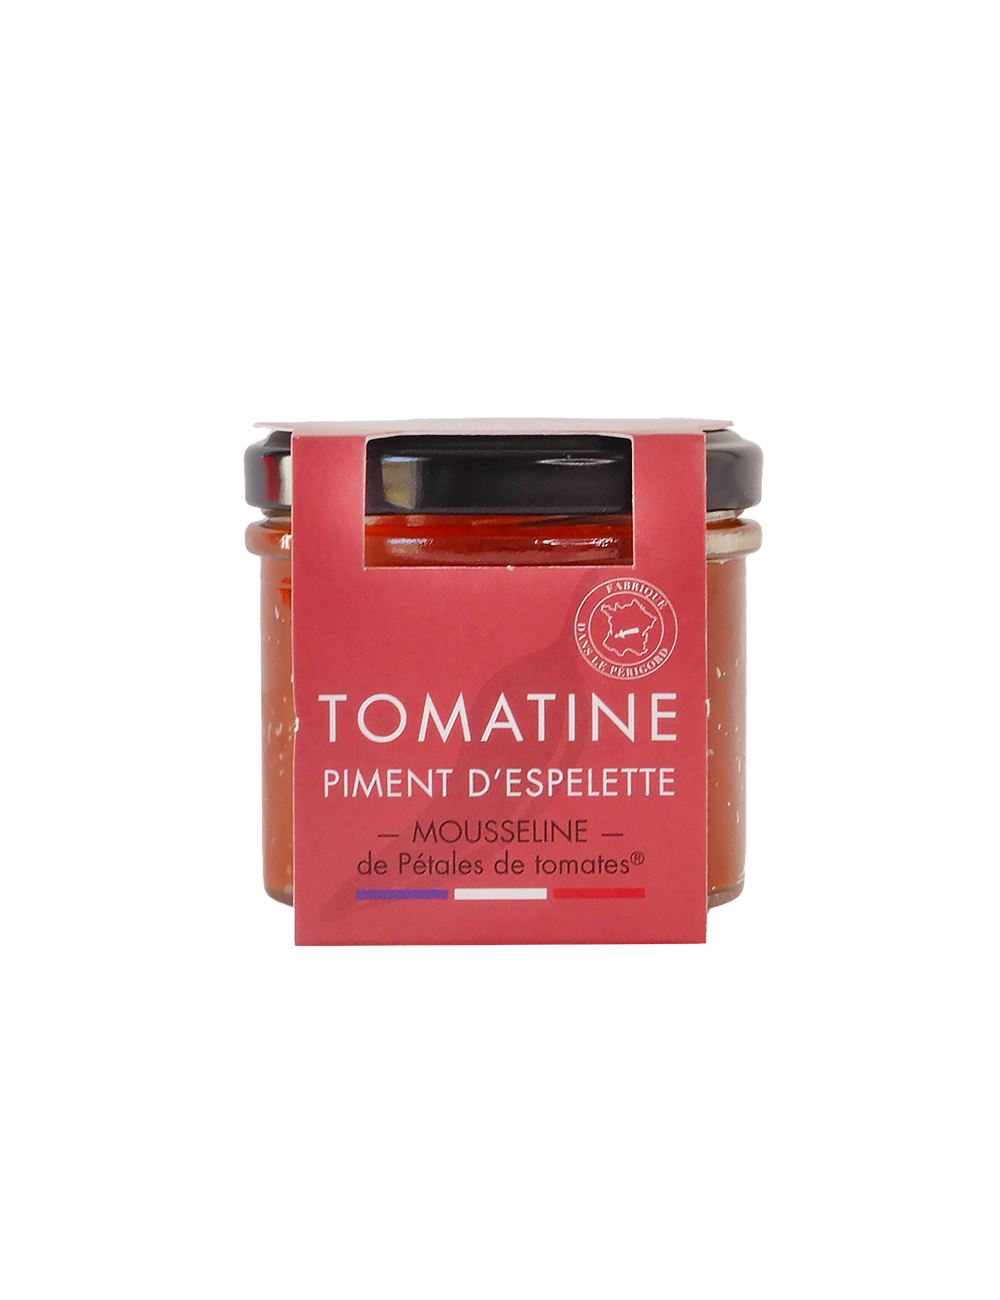 Tomatine Piment d'Espelette Marc peyrey